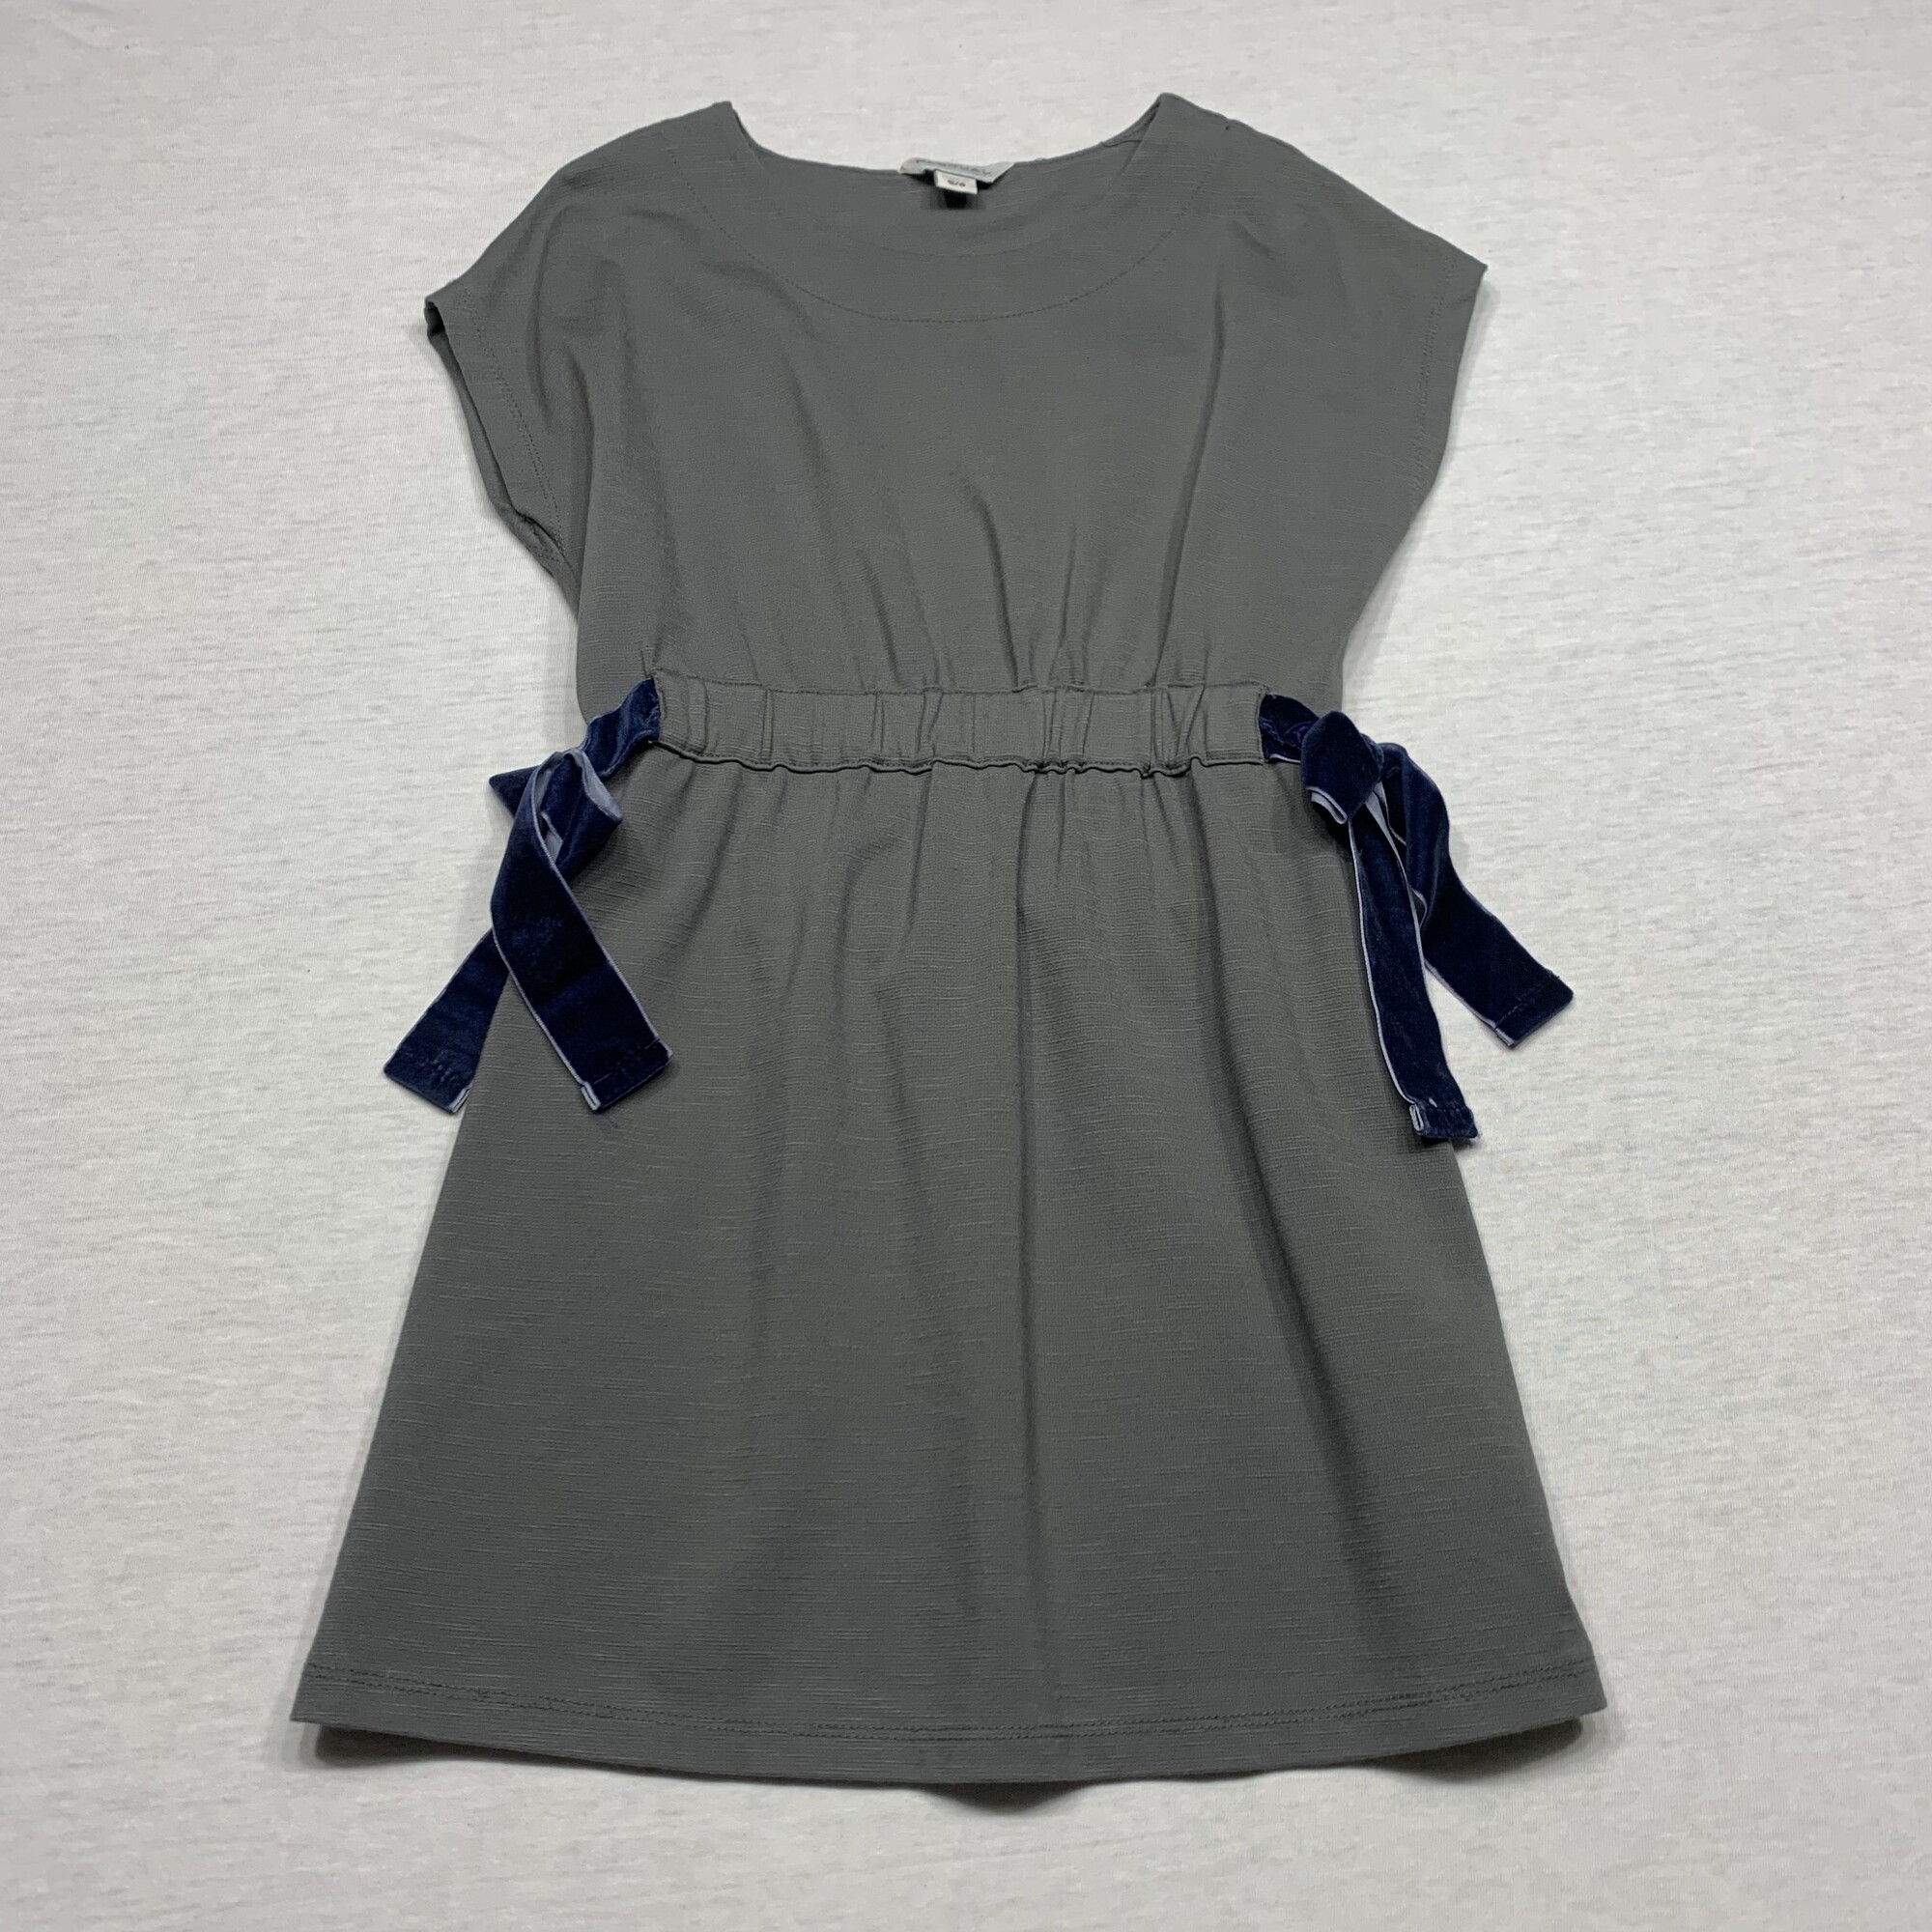 Knit dress with velvet ribbon ties